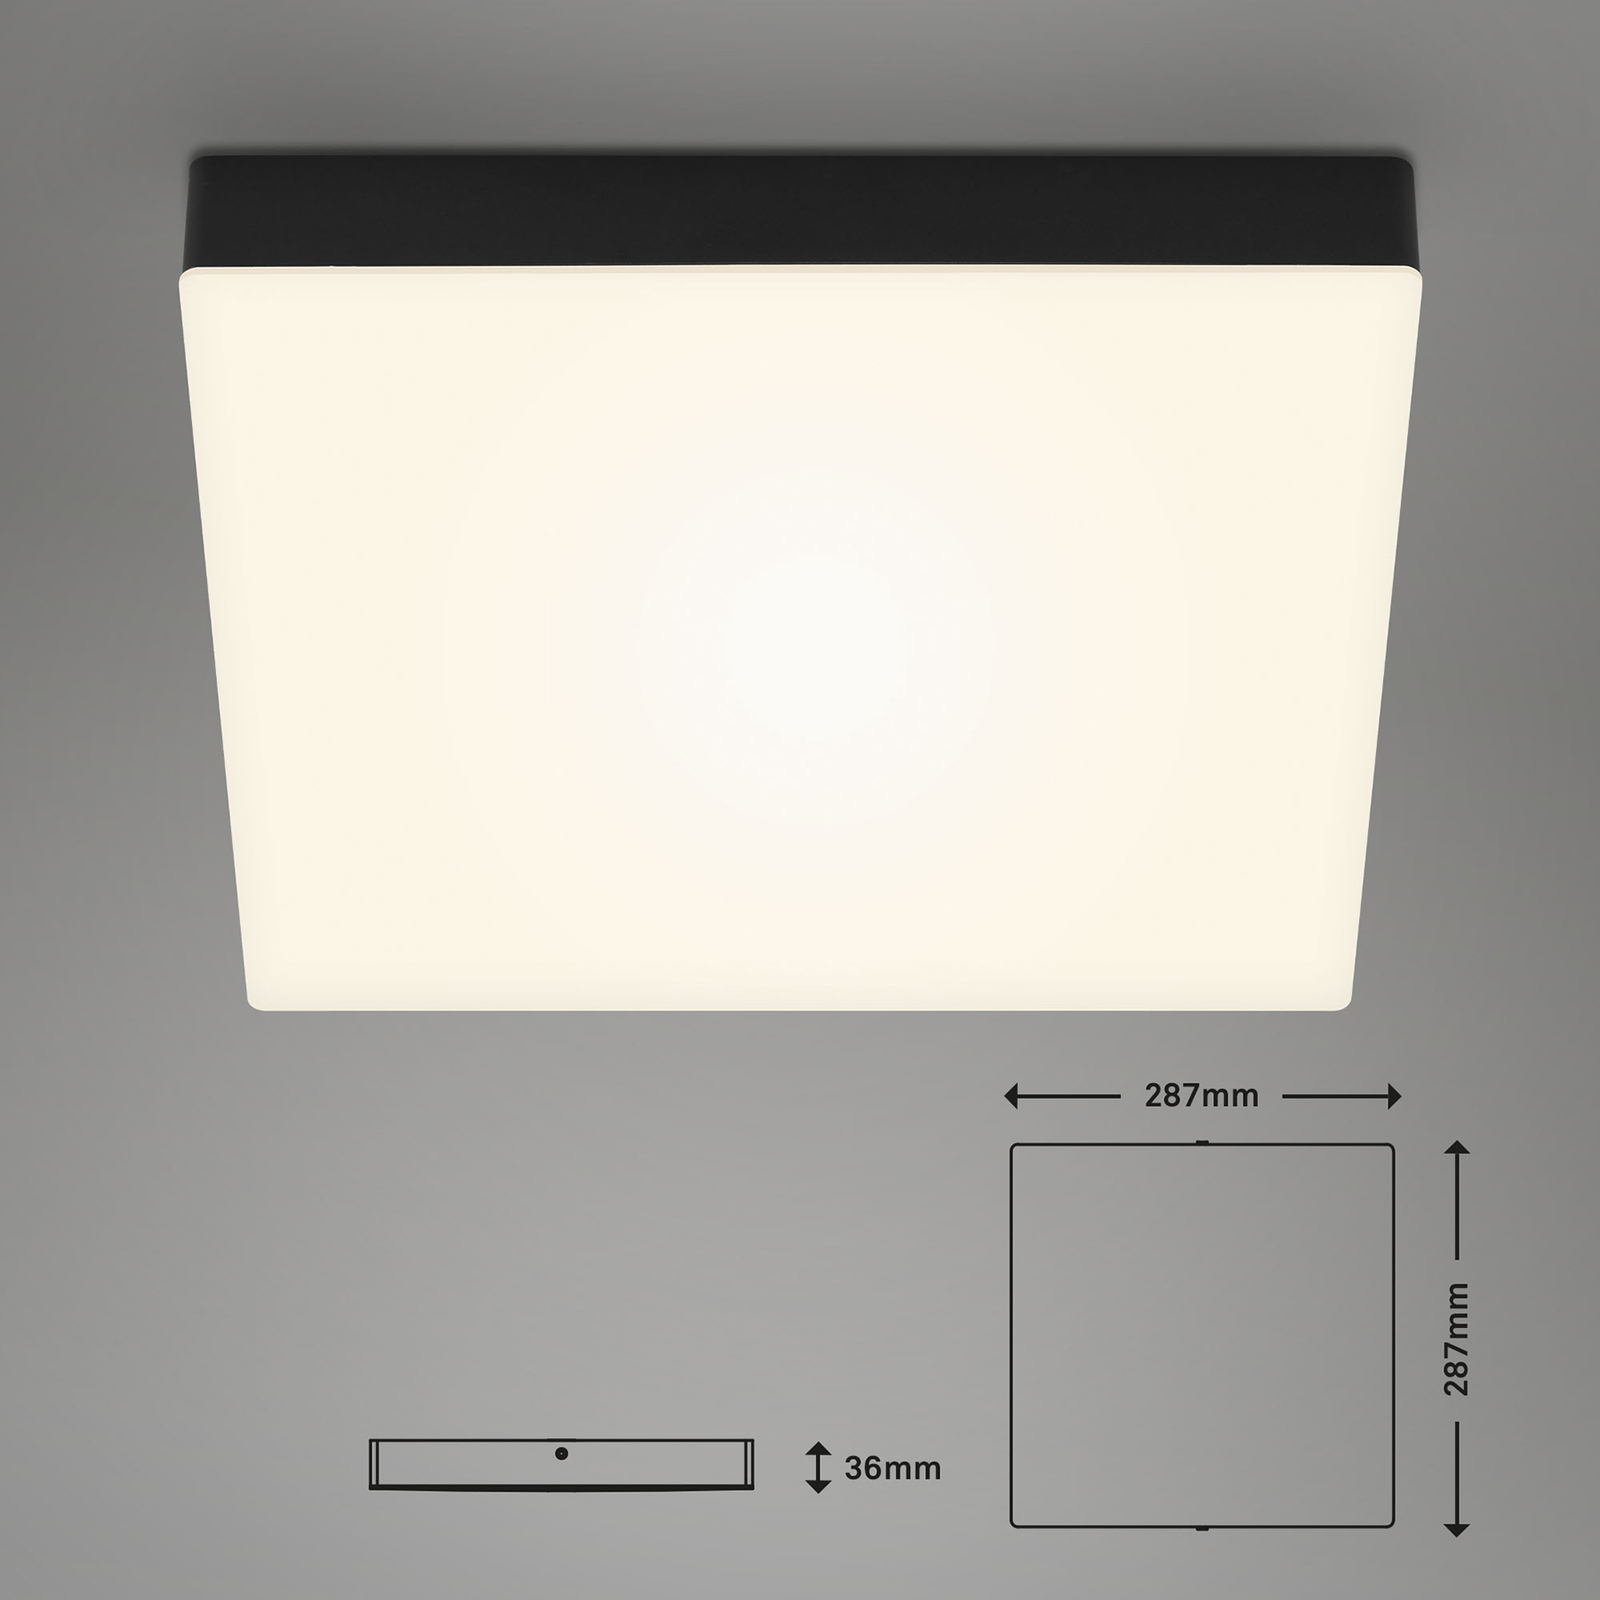 LED-Deckenlampe Flame, 3000K, 28,7x28,7cm, schwarz